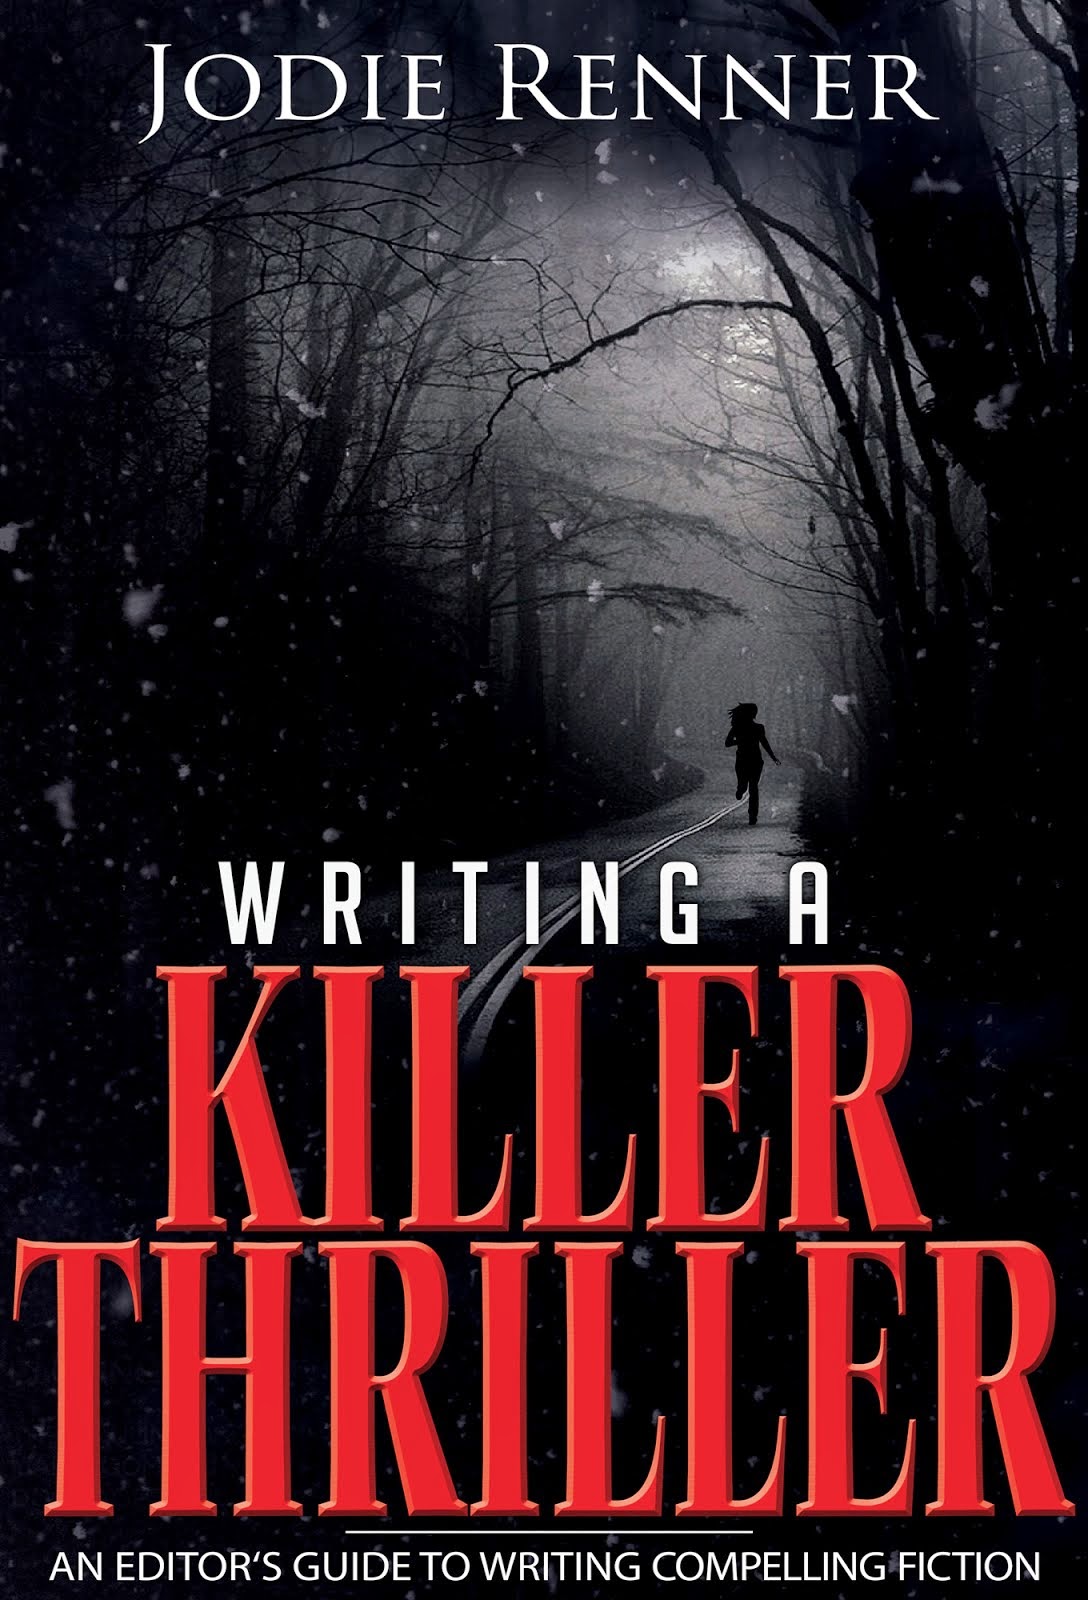 WRITING A KILLER THRILLER